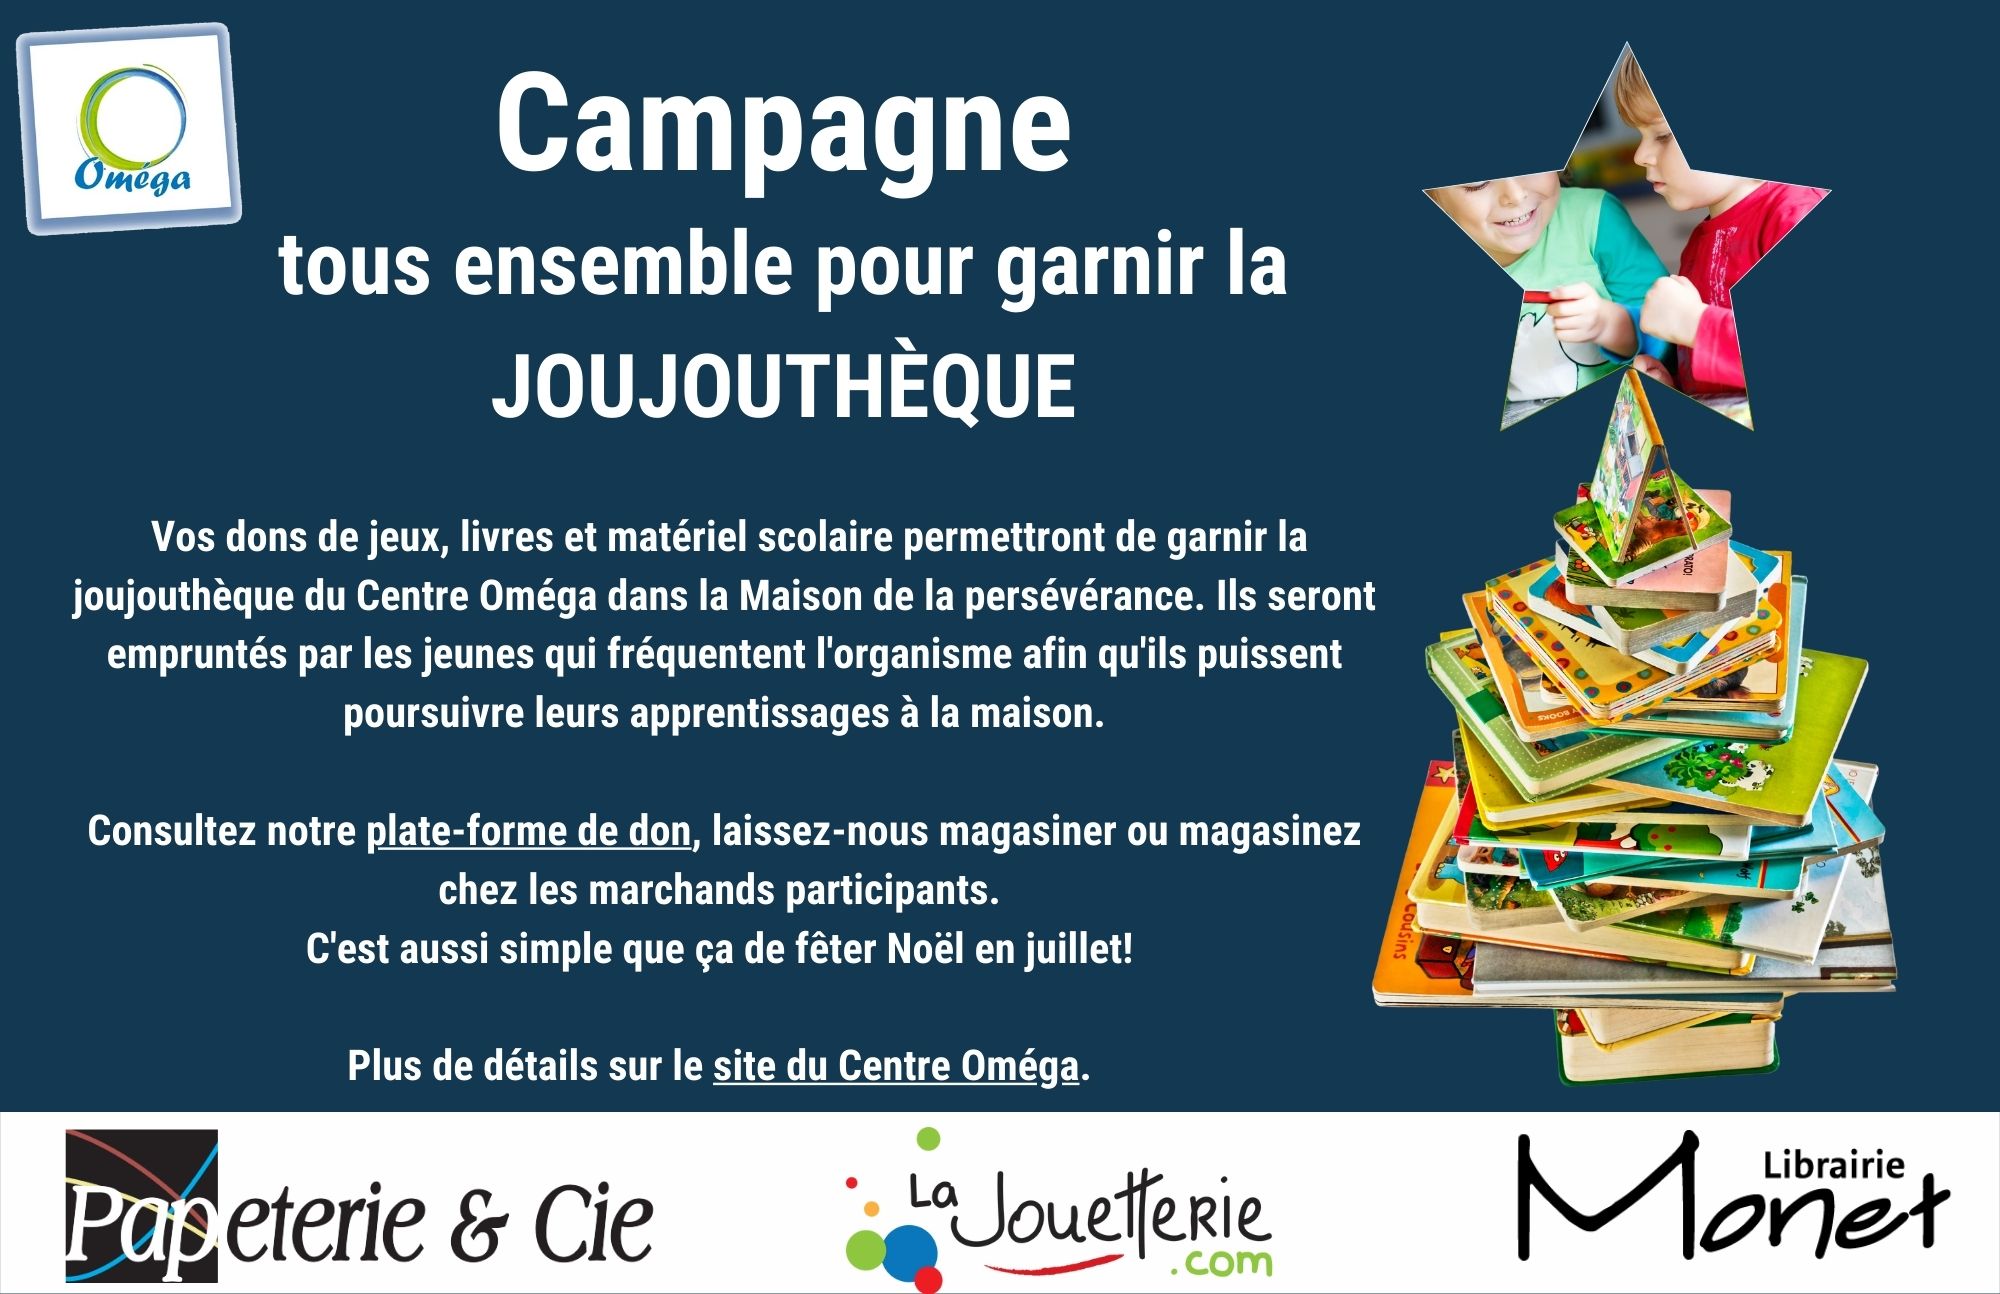 Campagne don joujouthèque (5.5 x 8.5 in) (8.5 x 5.5 in)